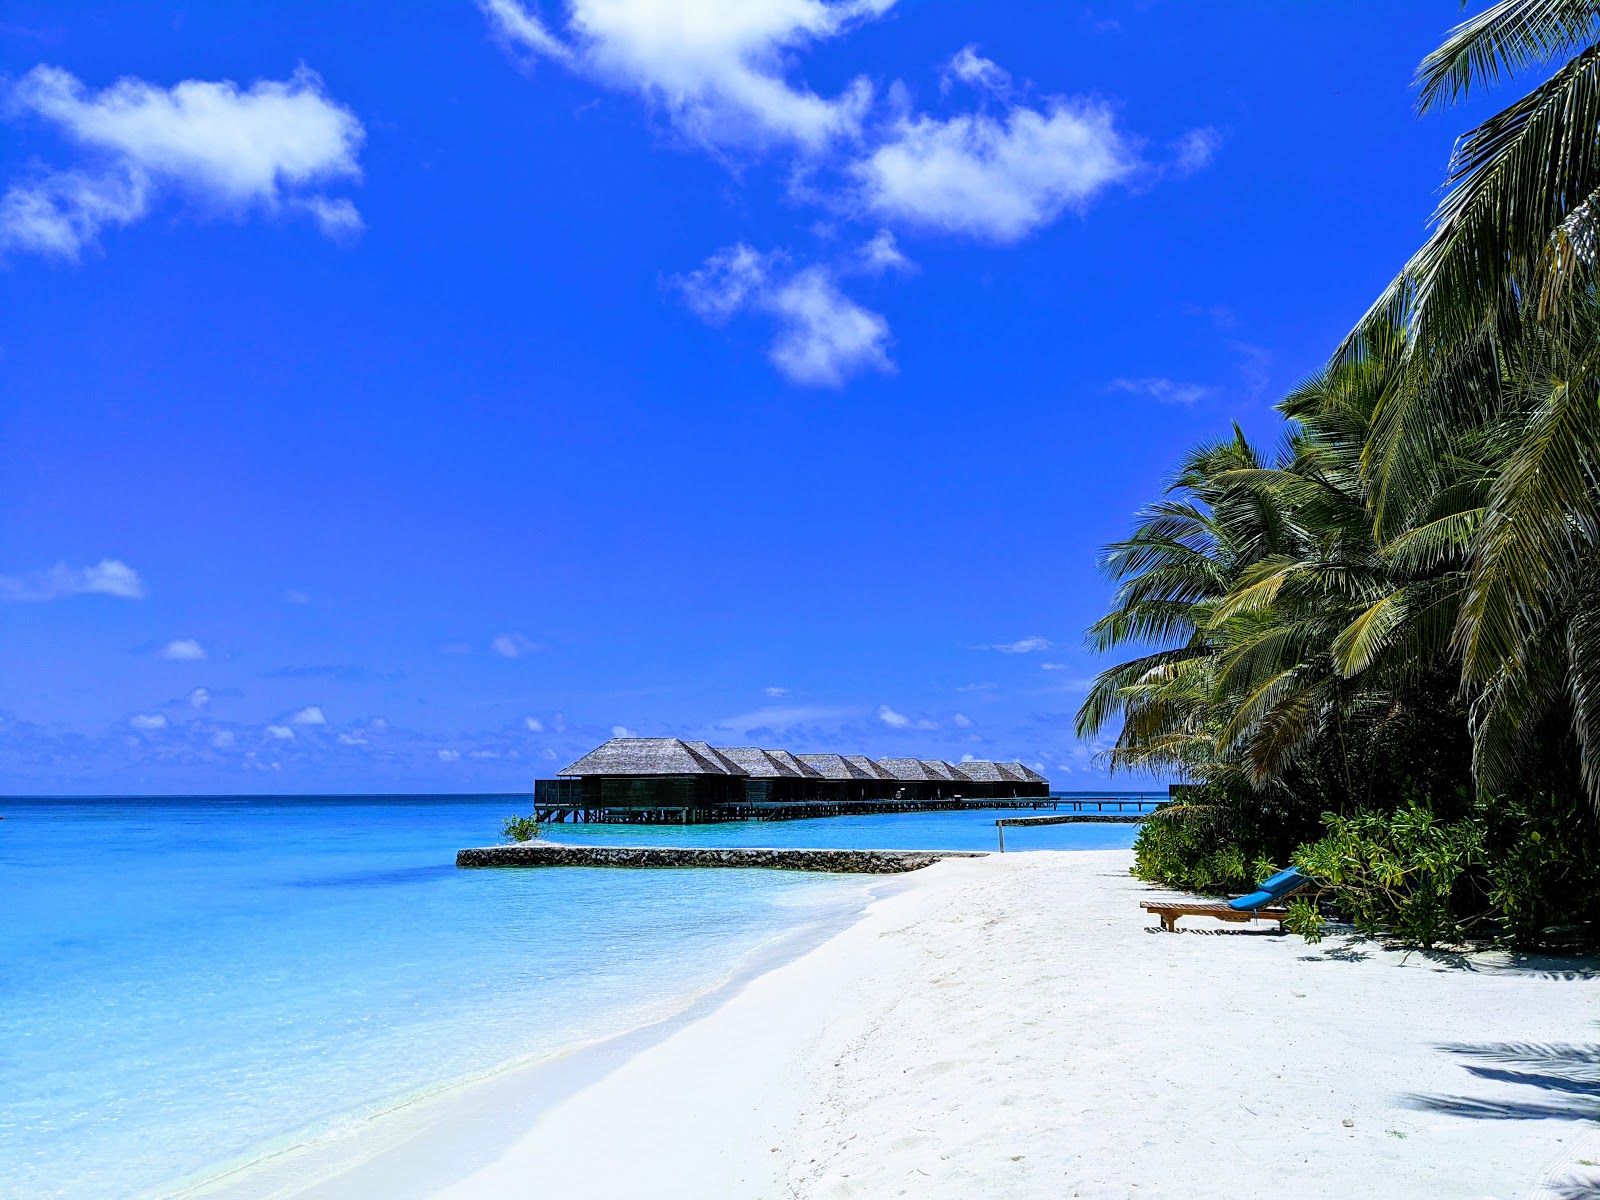 Photo of Veligandu Island Resort - popular place among relax connoisseurs